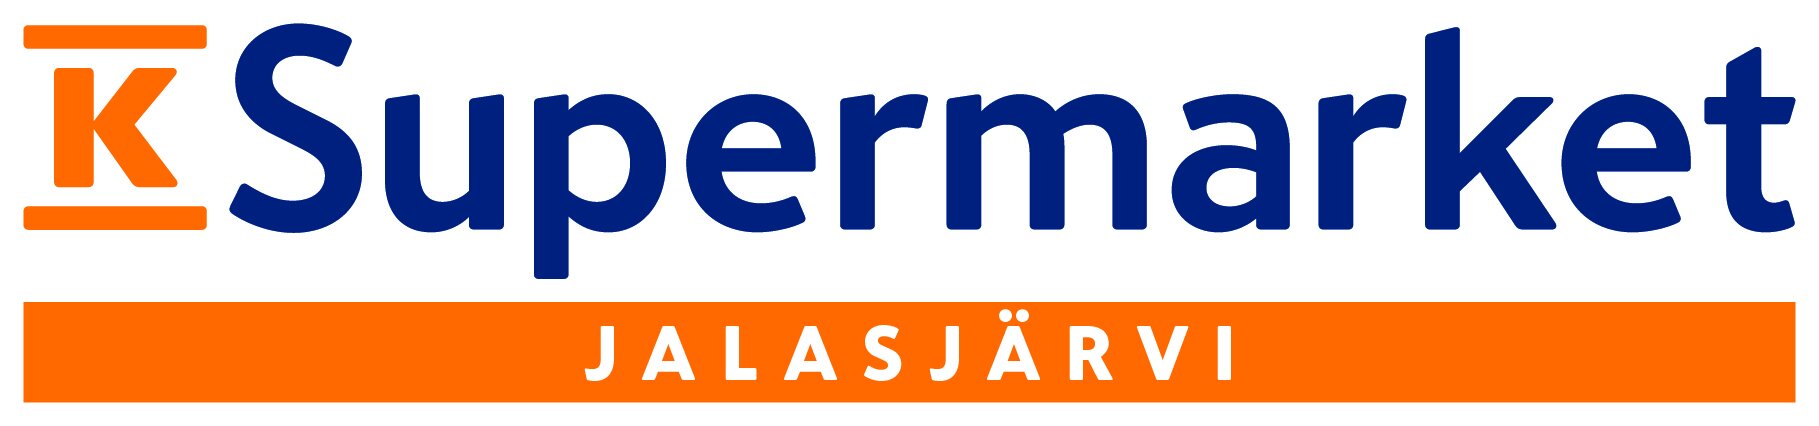 KSM Jalasjärvi logo.jpg